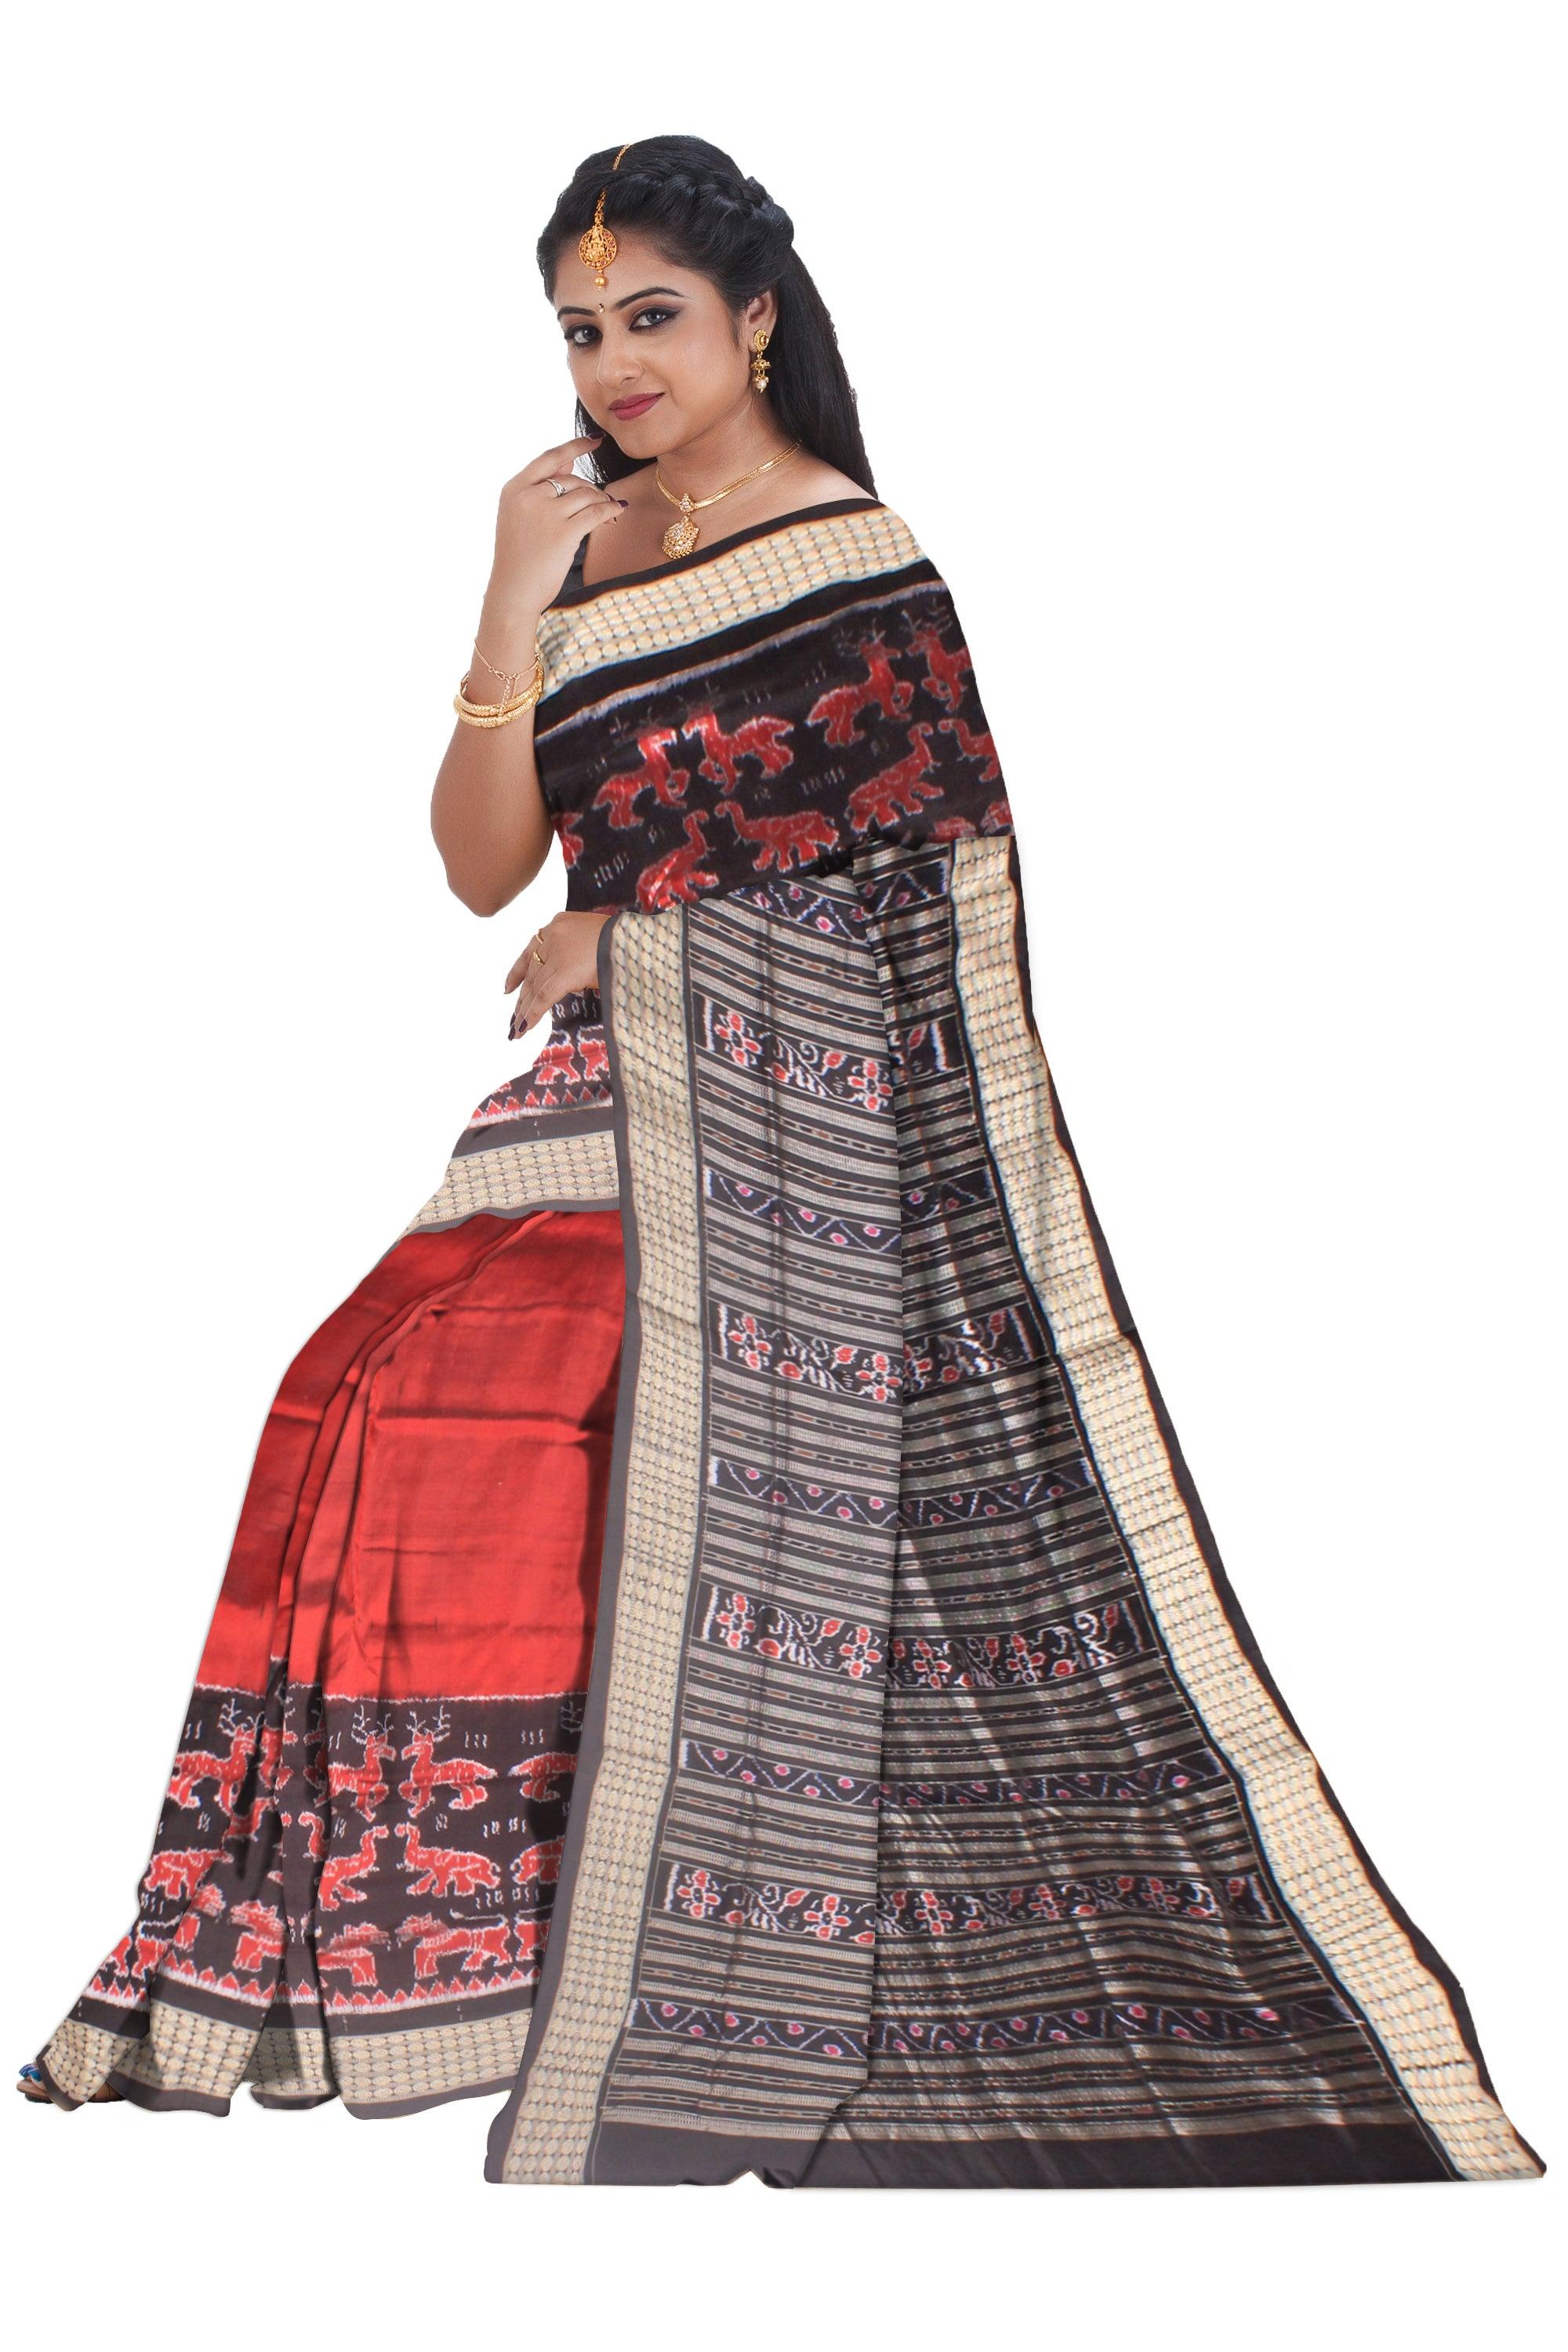 Sambalpuri Pata Saree in Maroon and Black Color in animal  design body with blouse piece. - Koshali Arts & Crafts Enterprise